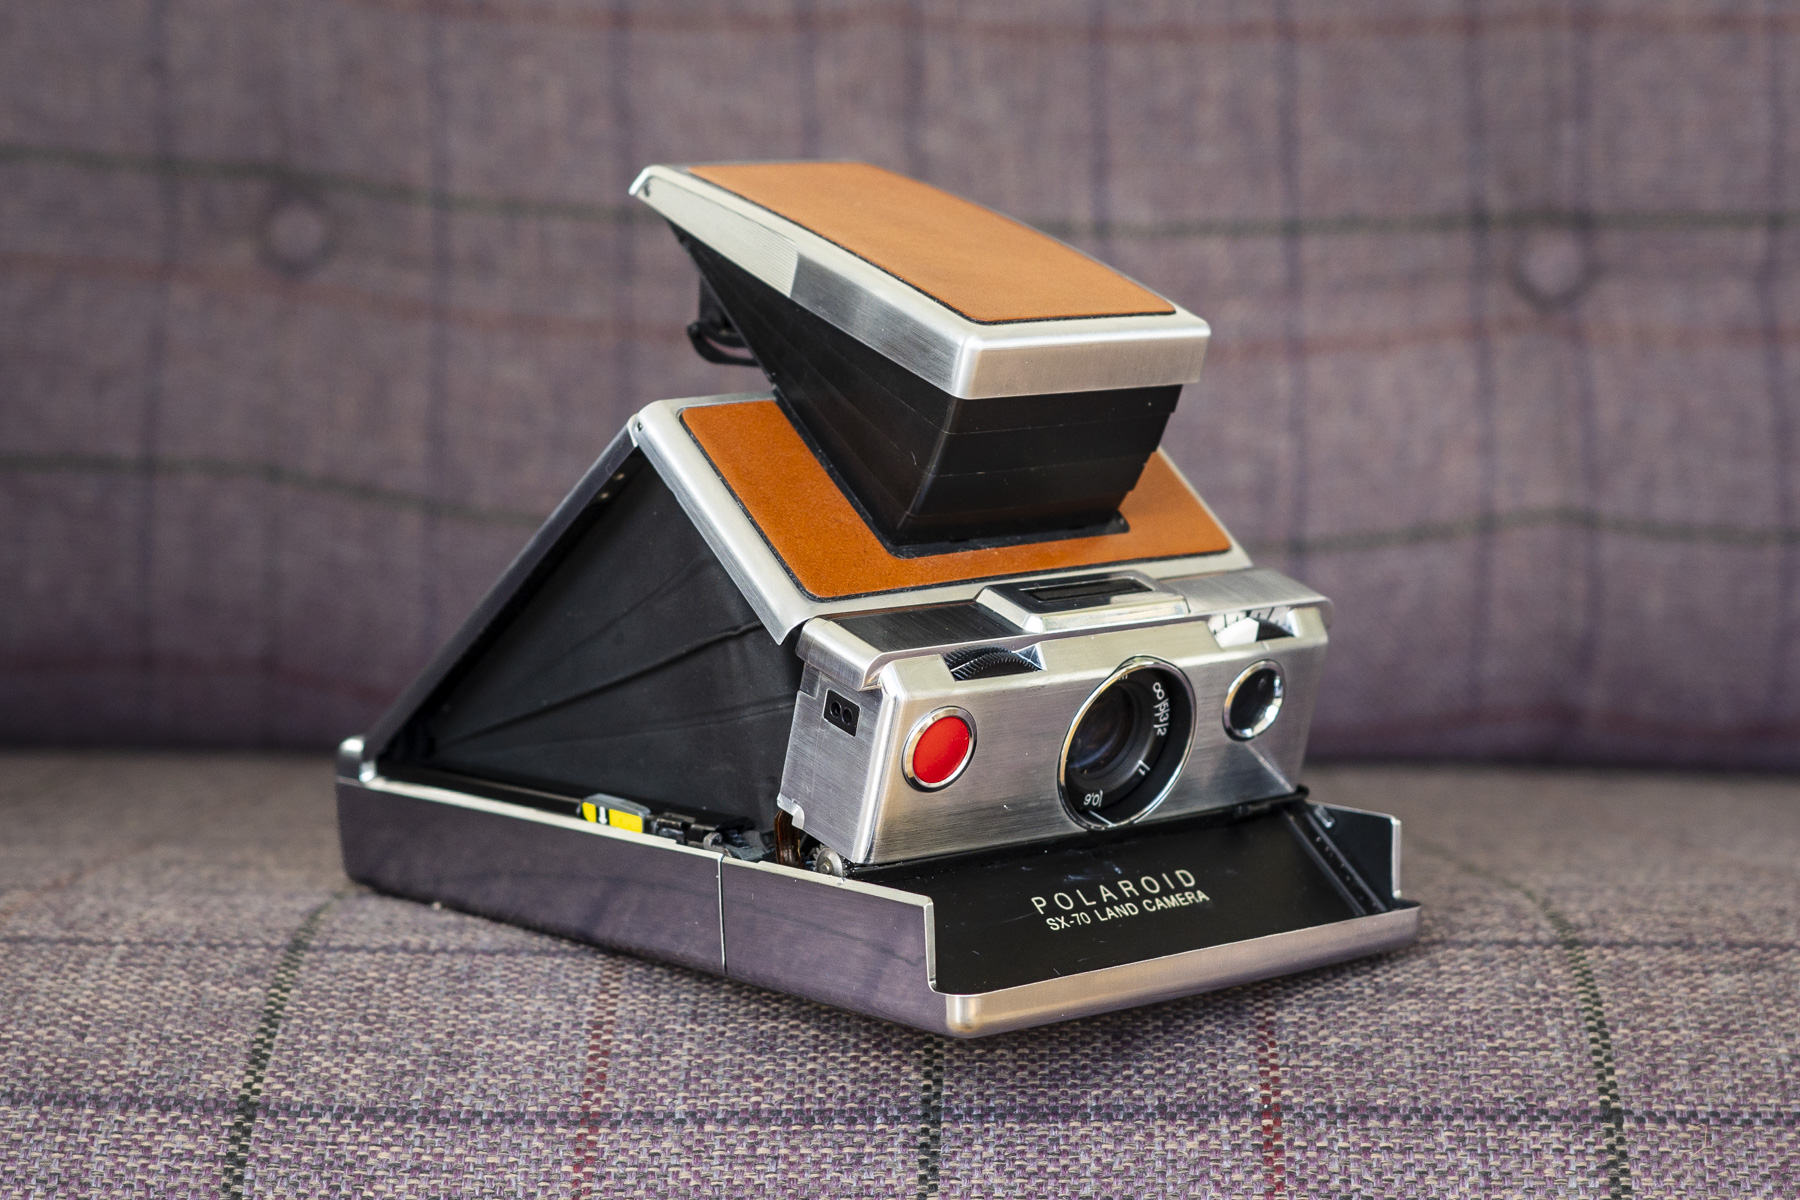 Polaroid Originals Reclaims 'Polaroid' Name, Unveils Polaroid Now Camera